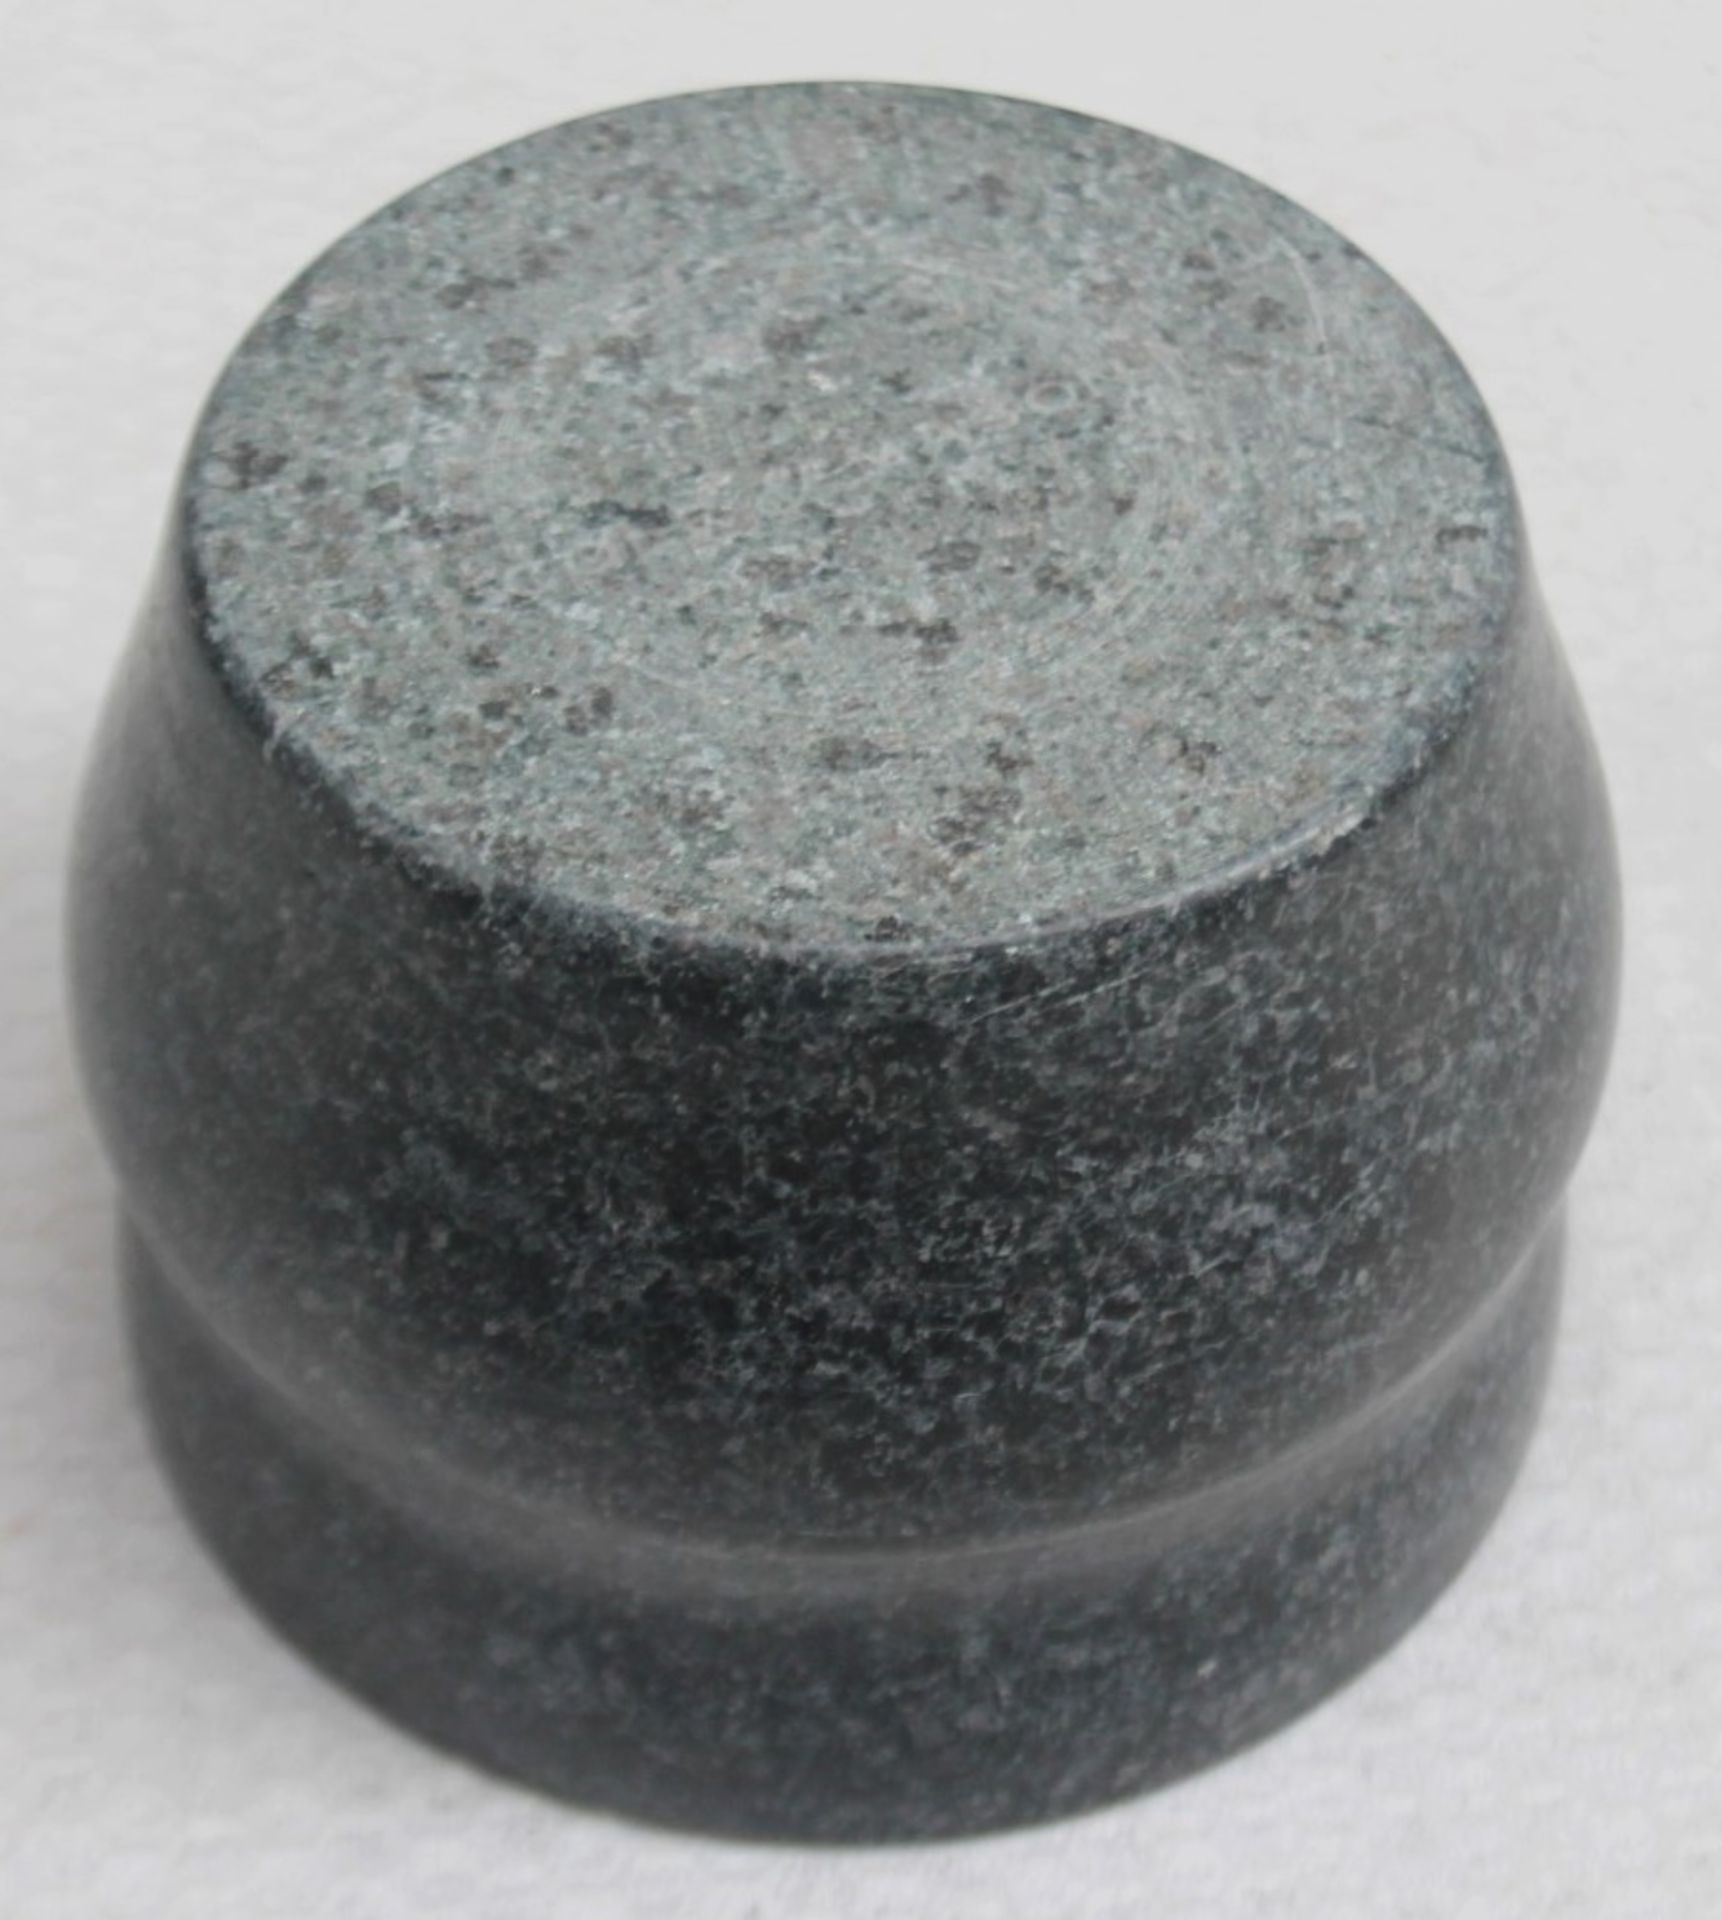 1 x COLE & MASON Granite Pestle & Mortar 18cm, Black - Unused Boxed Stock - Ref: 3310048/HAS2103/ - Image 6 of 8